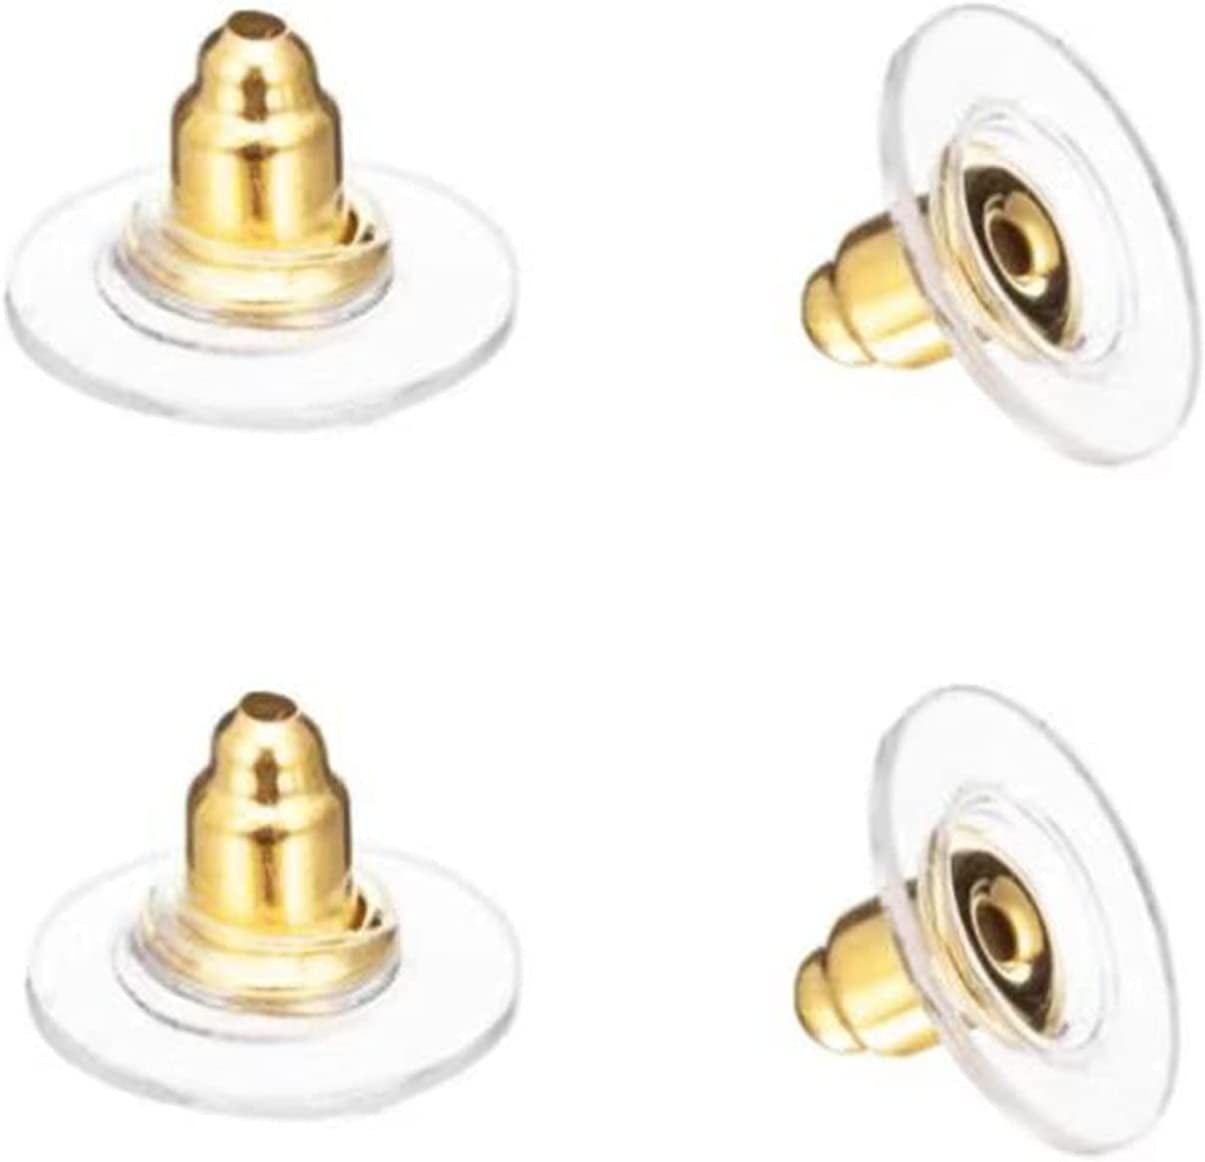 100pcs Rubber Disc Earring Backs To Secure Heavy Stud Post Style Earrings  US